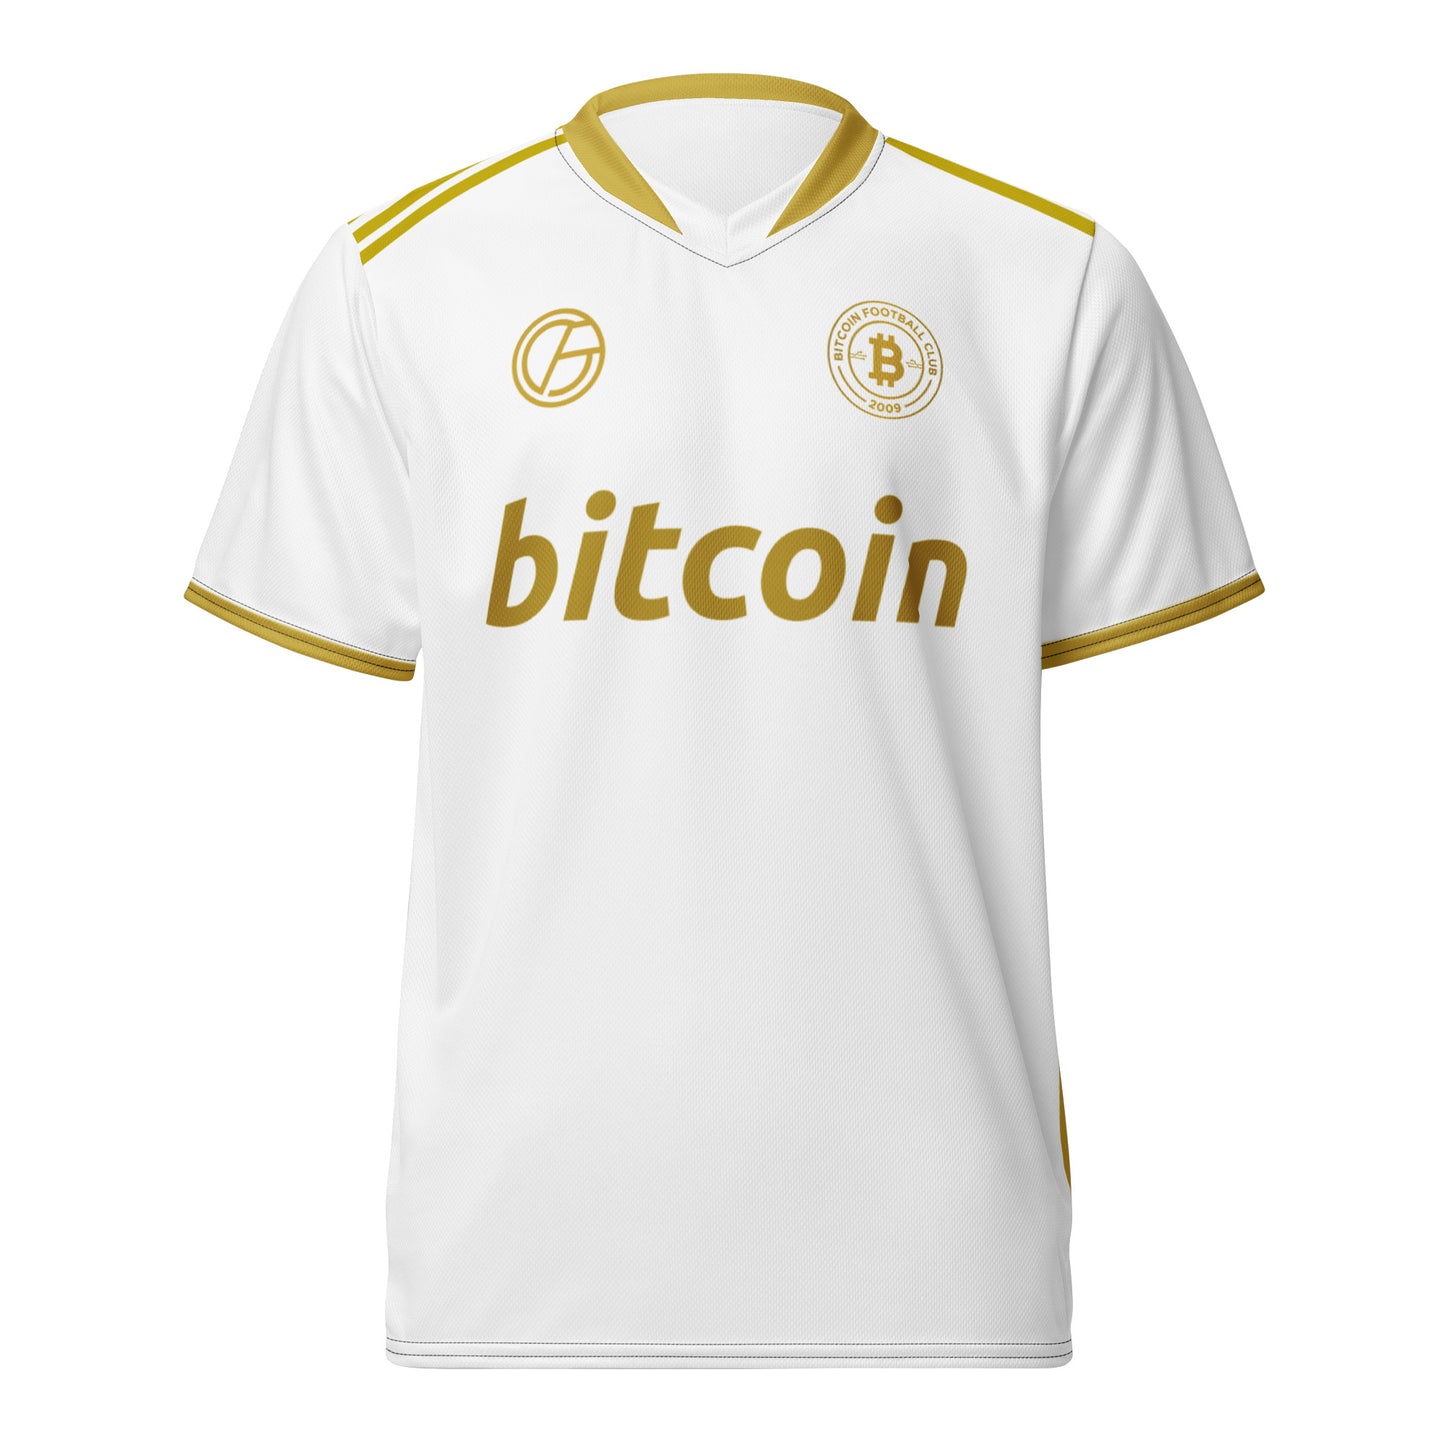 Bitcoin FC "Classic" Jersey